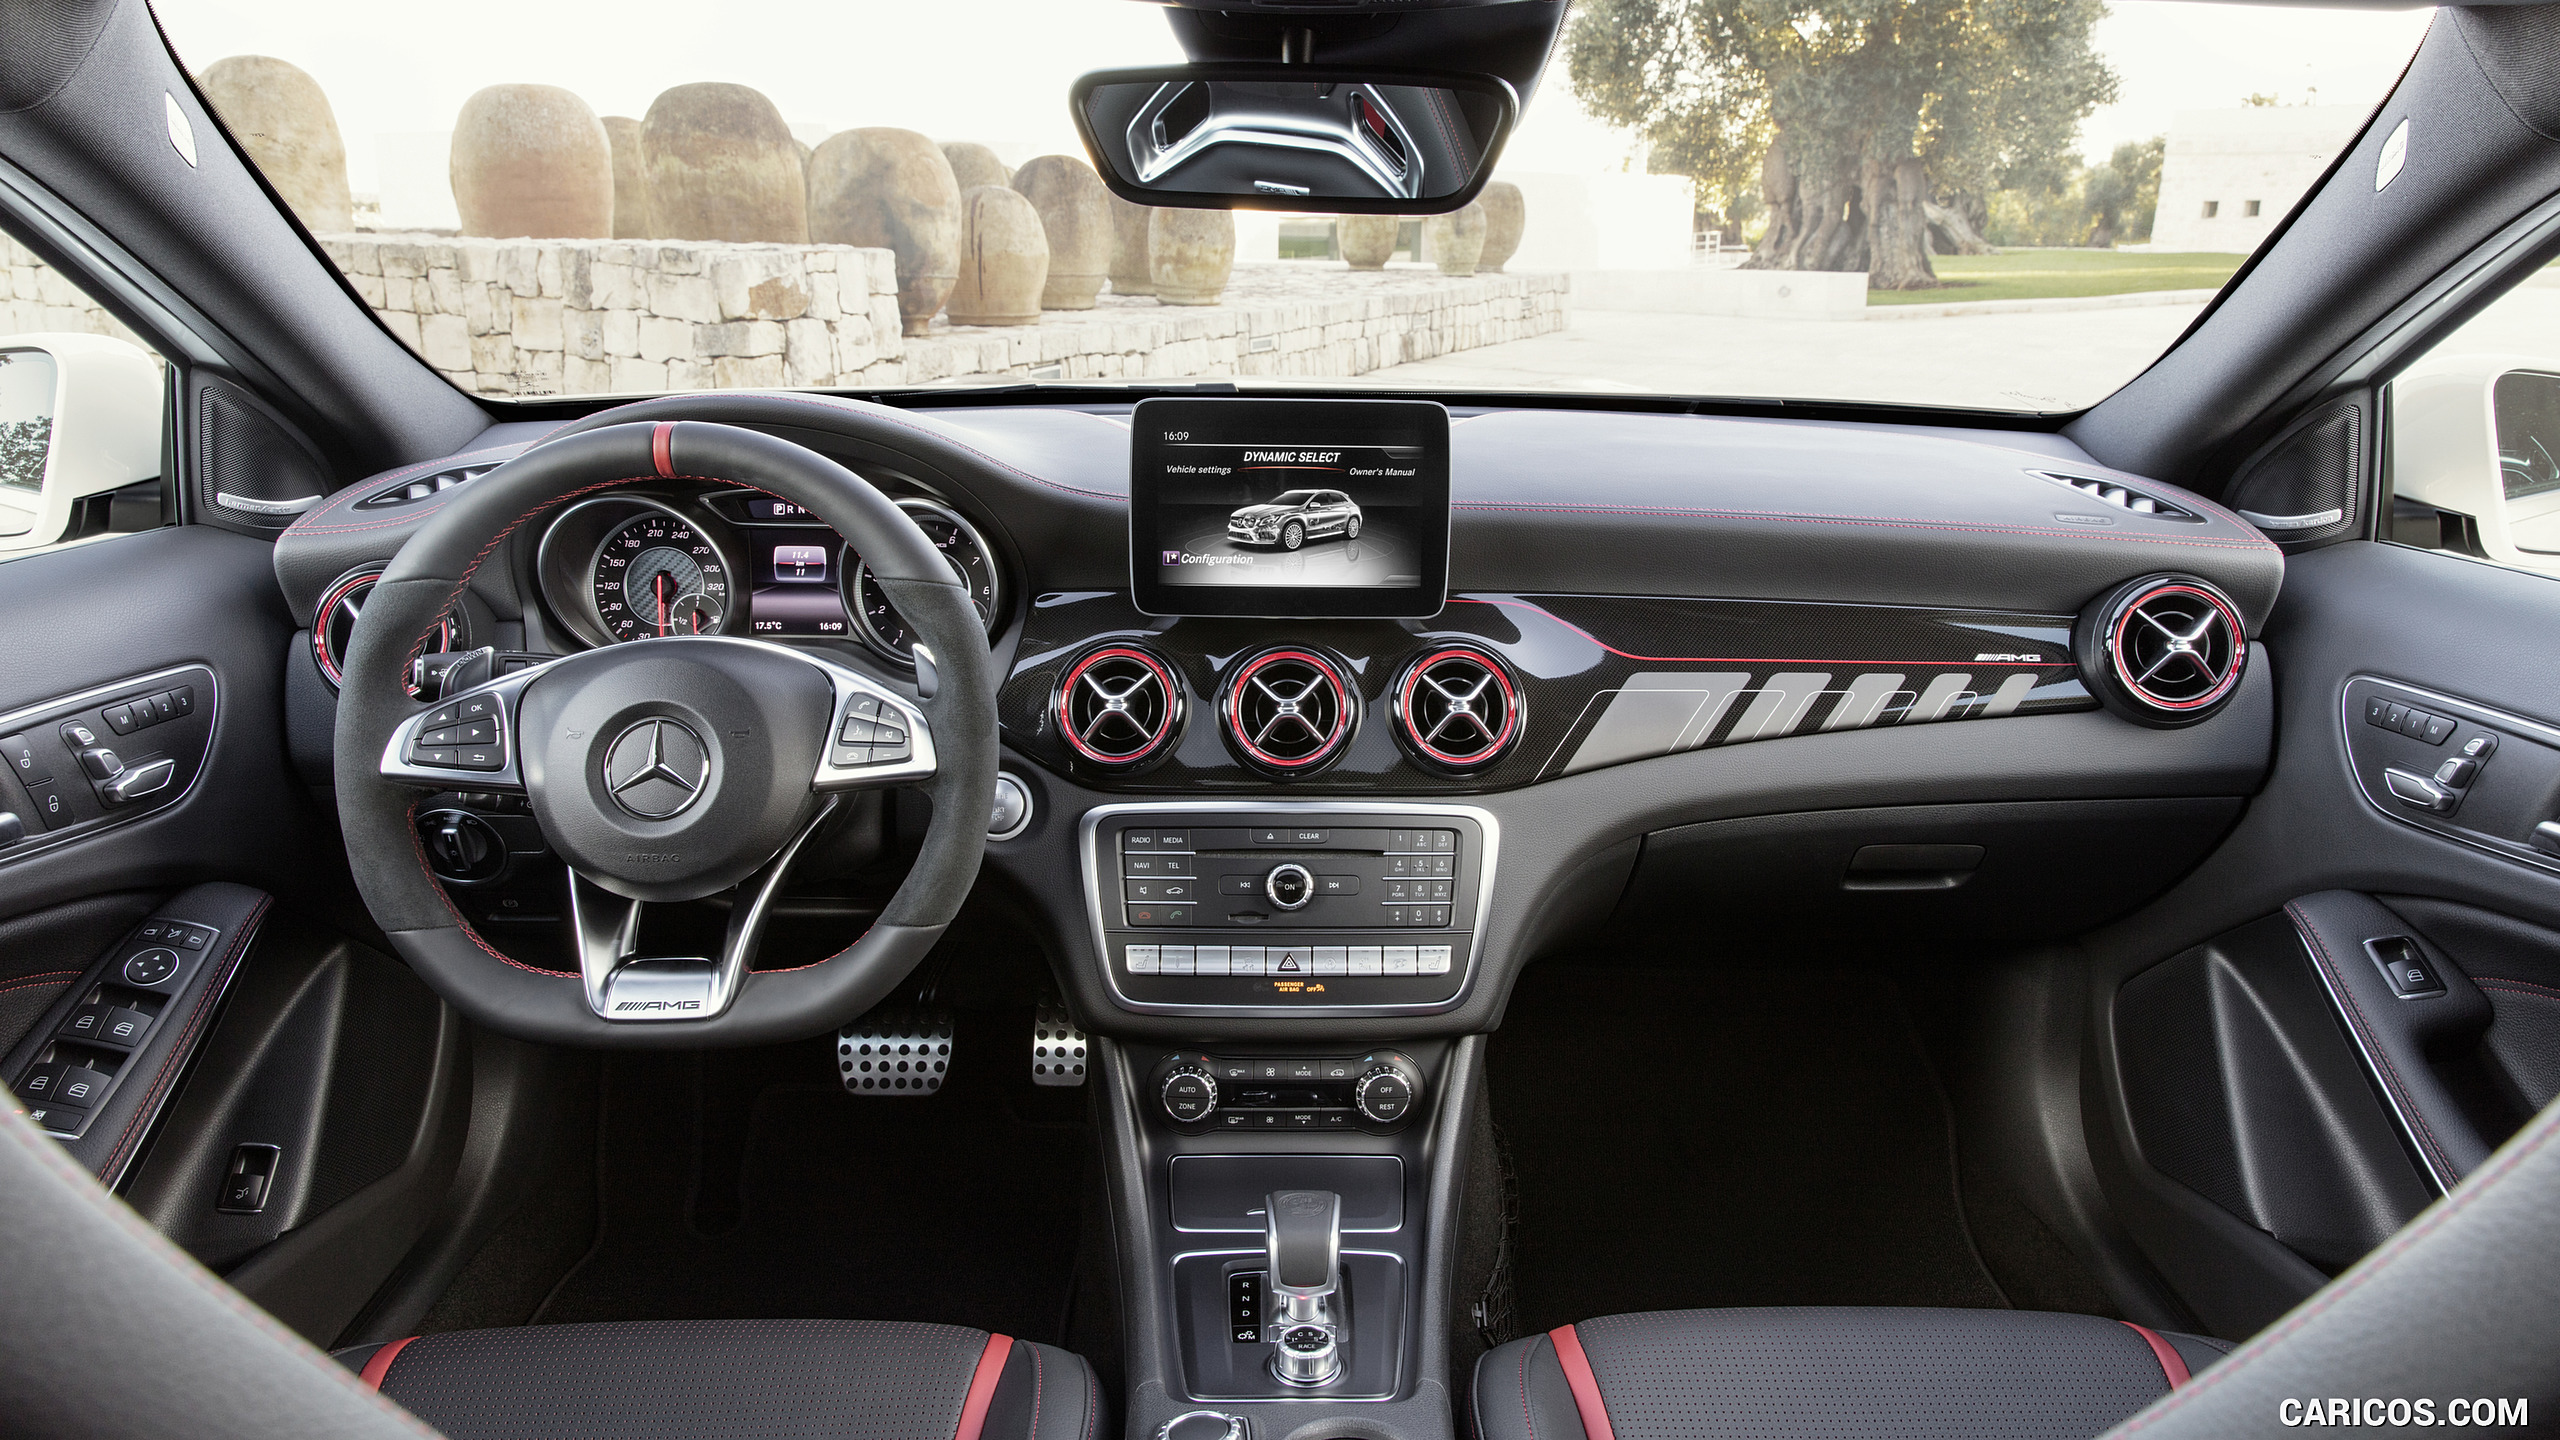 2018 Mercedes-AMG GLA 45 4MATIC - Interior, Cockpit, #43 of 88